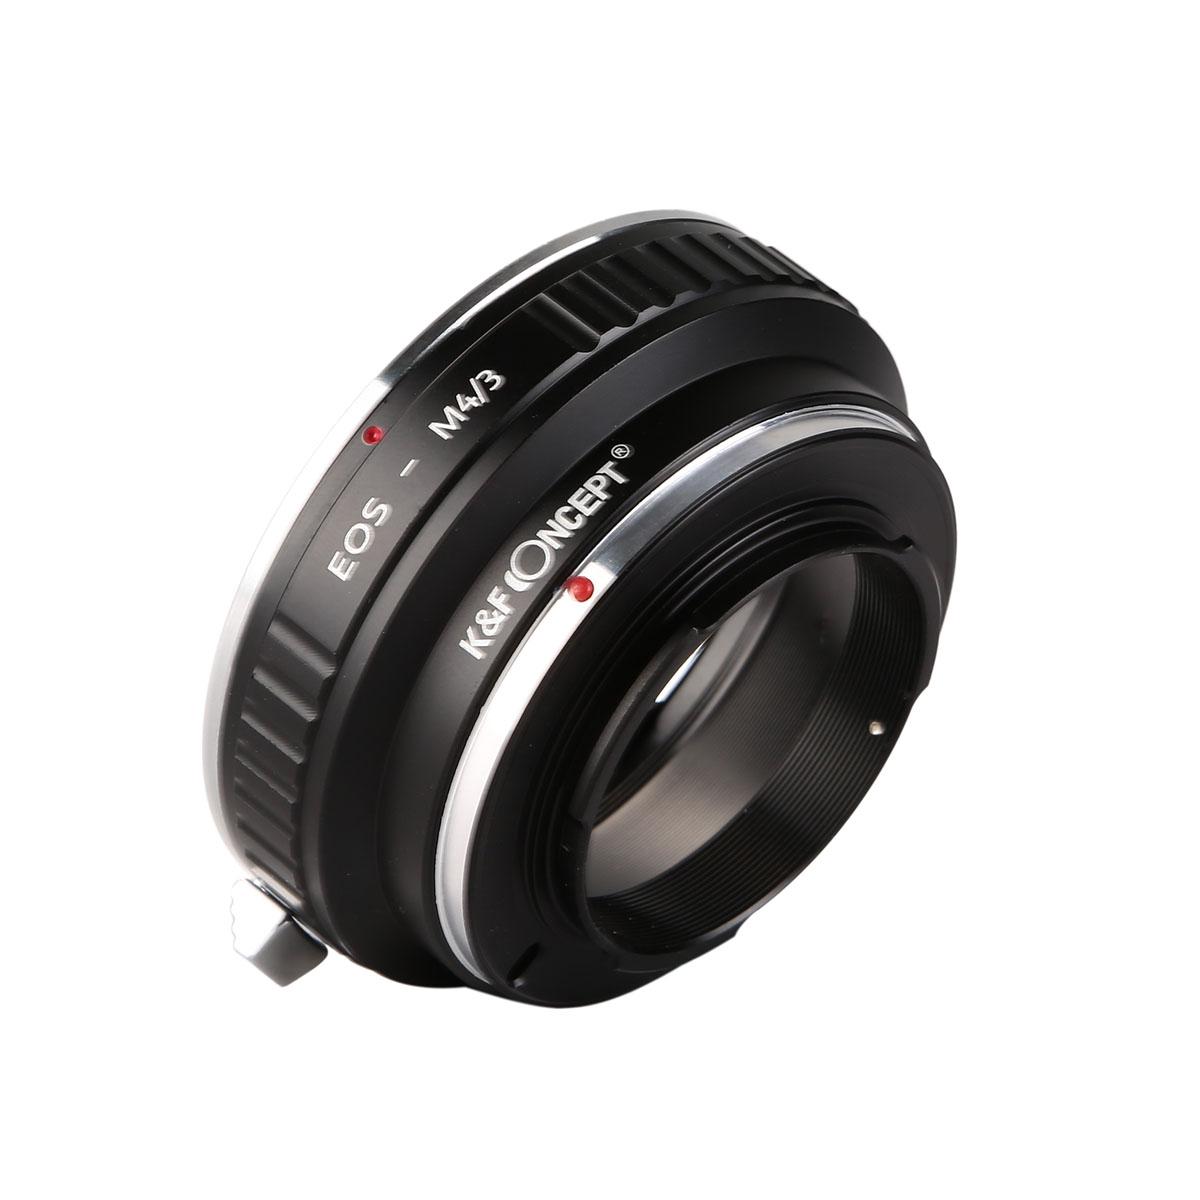 K&F Concept High Precision Lens Adapter KF06.090 for EOS-M4/3